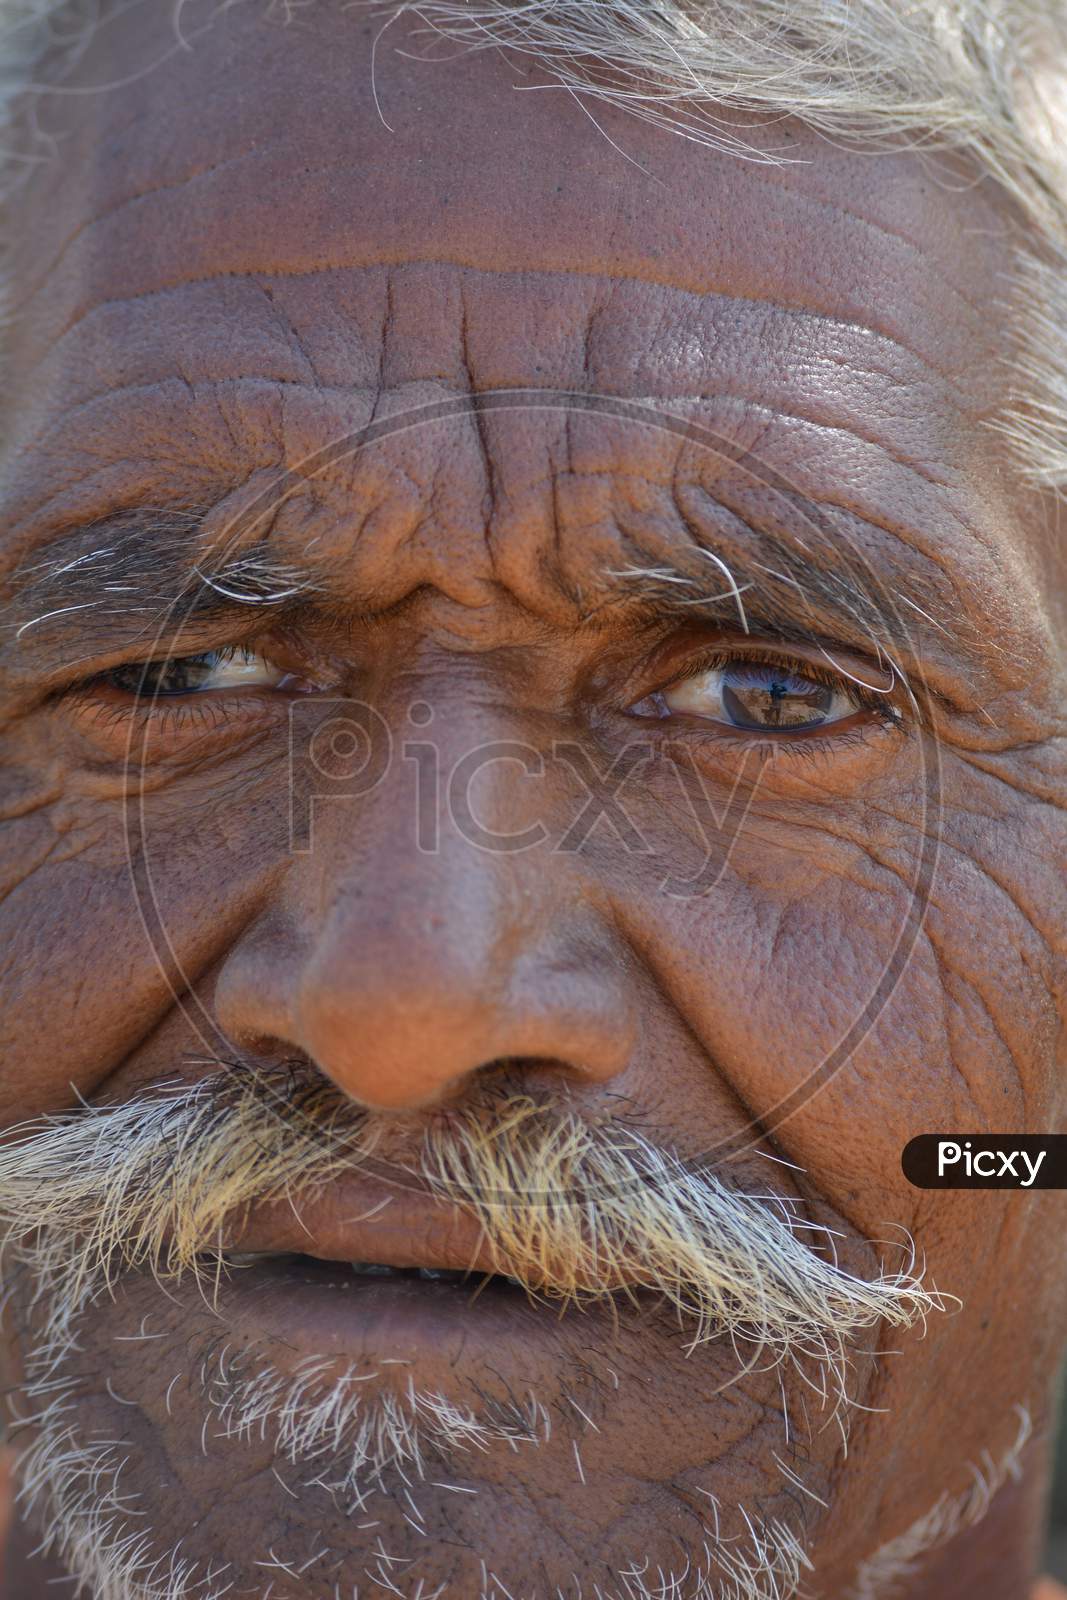 TIKAMGARH, MADHYA PRADESH, INDIA - FEBRUARY 03, 2020: Closeup shot of the eyes of an old man.